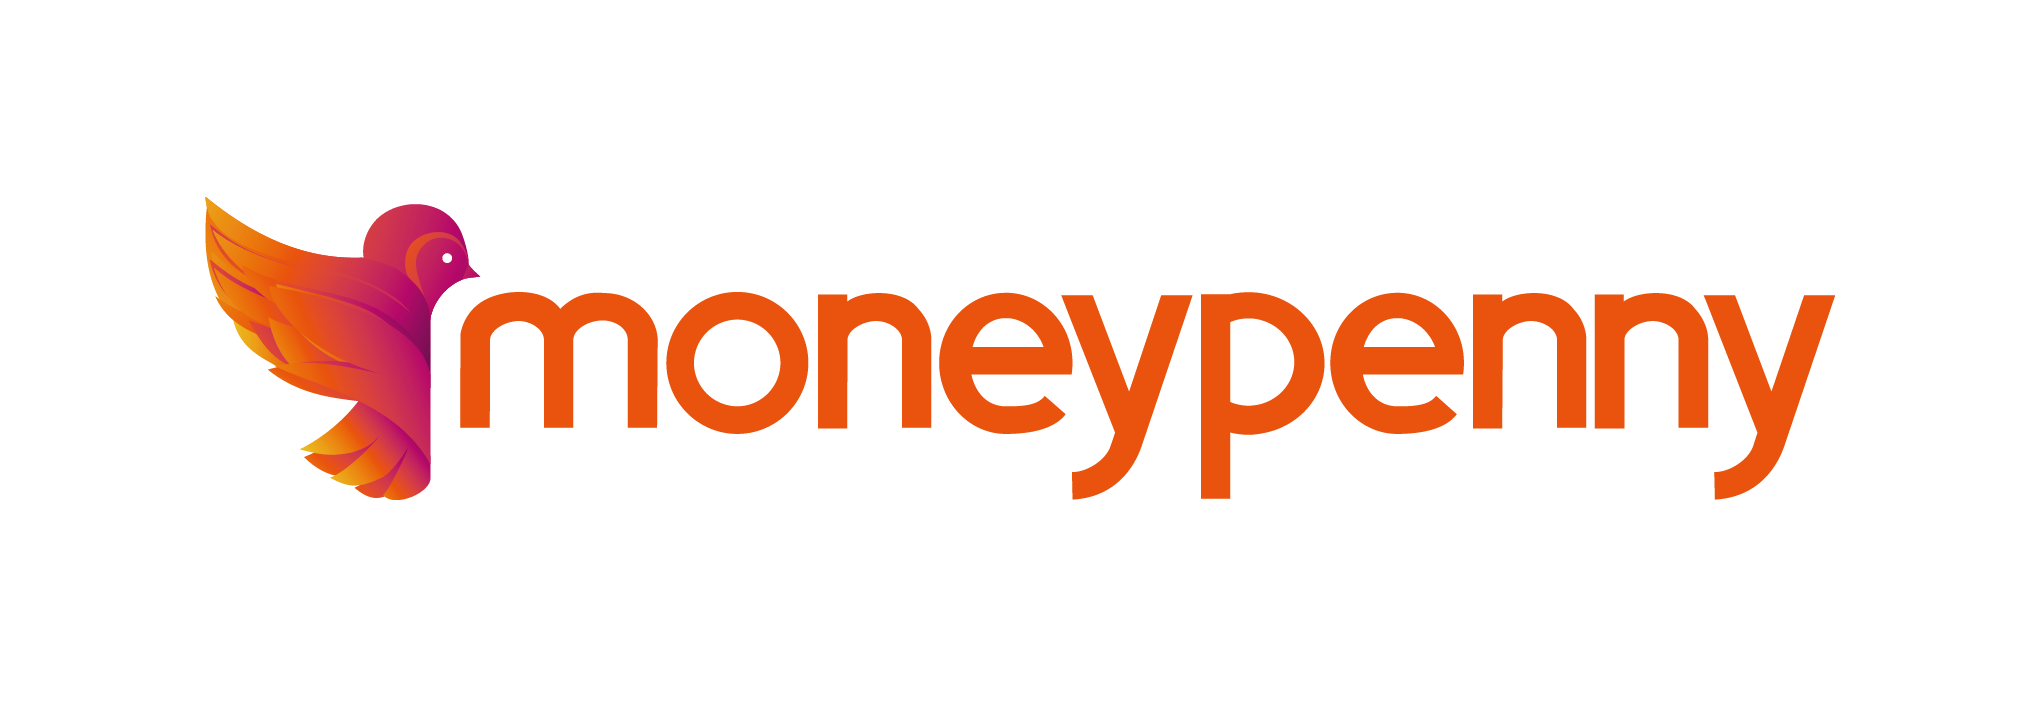 Moneypenny-logo-cmyk.png